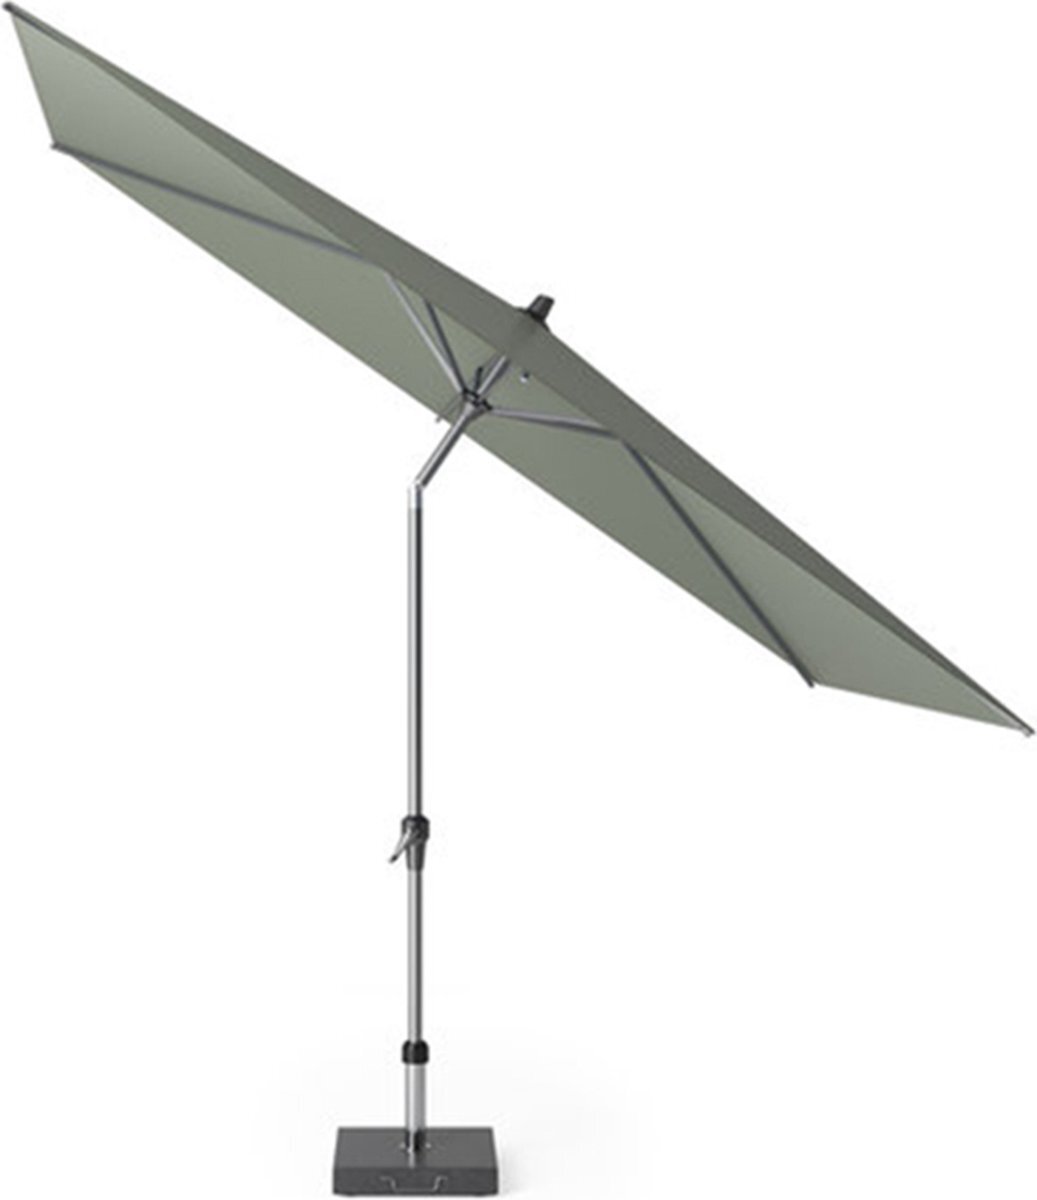 Platinum Riva parasol 300x200 cm olijf met kniksysteem